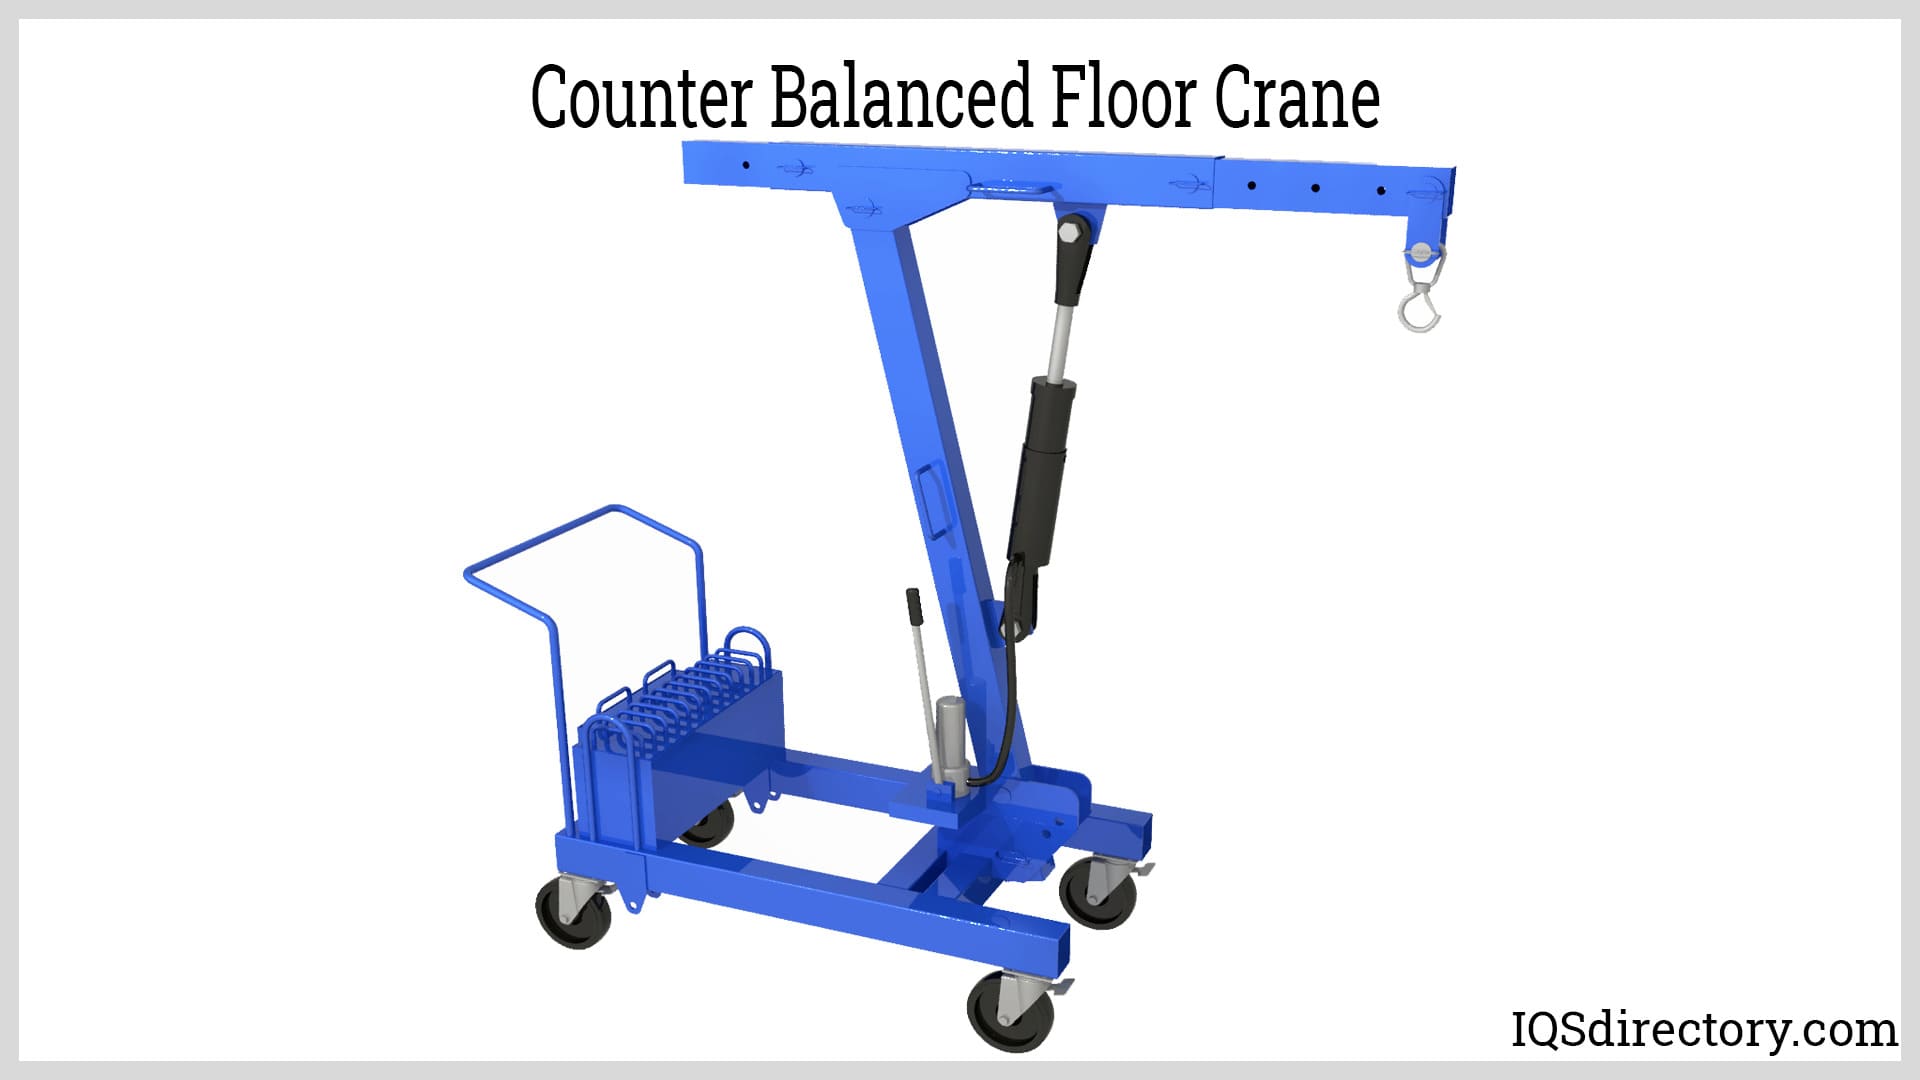 Counter Balanced Floor Crane